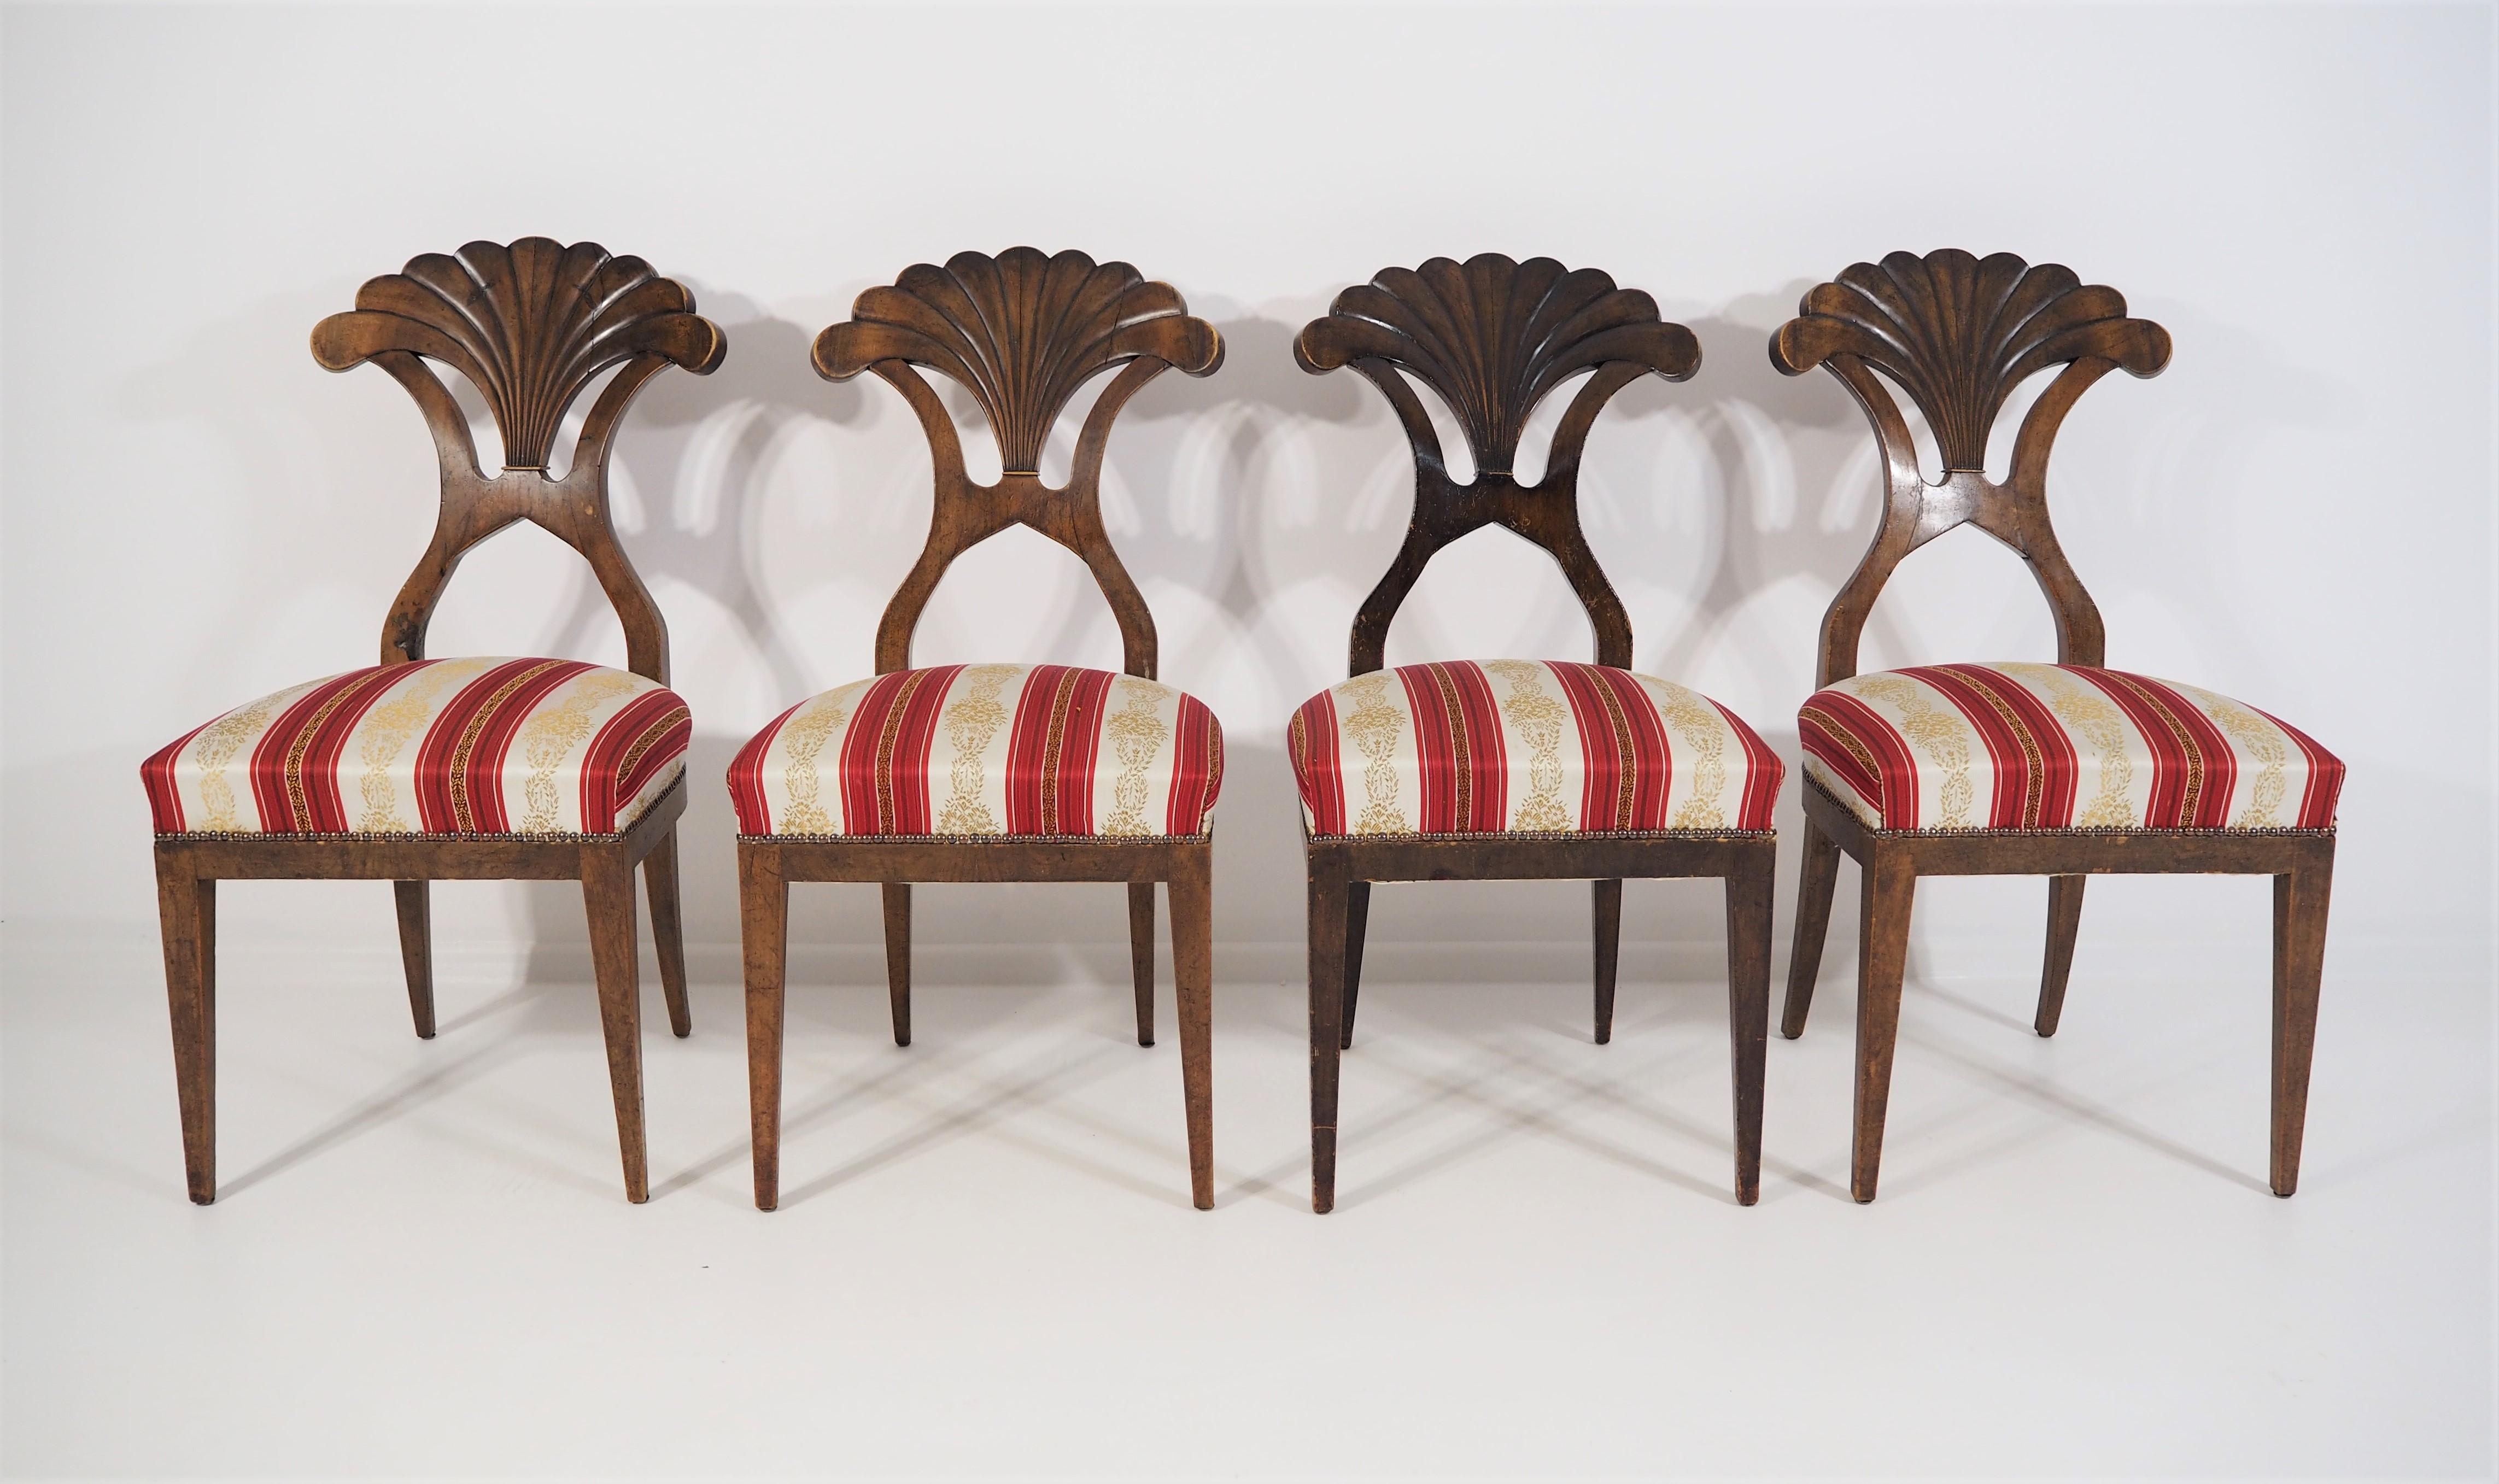 4 Biedermeier dining chairs. On elegant legs, shell-shaped backrests with walnut veneer. Established in the 19th century. Material: walnut. Dimensions: (H x W x D) 92 x 45 x 55 cm.